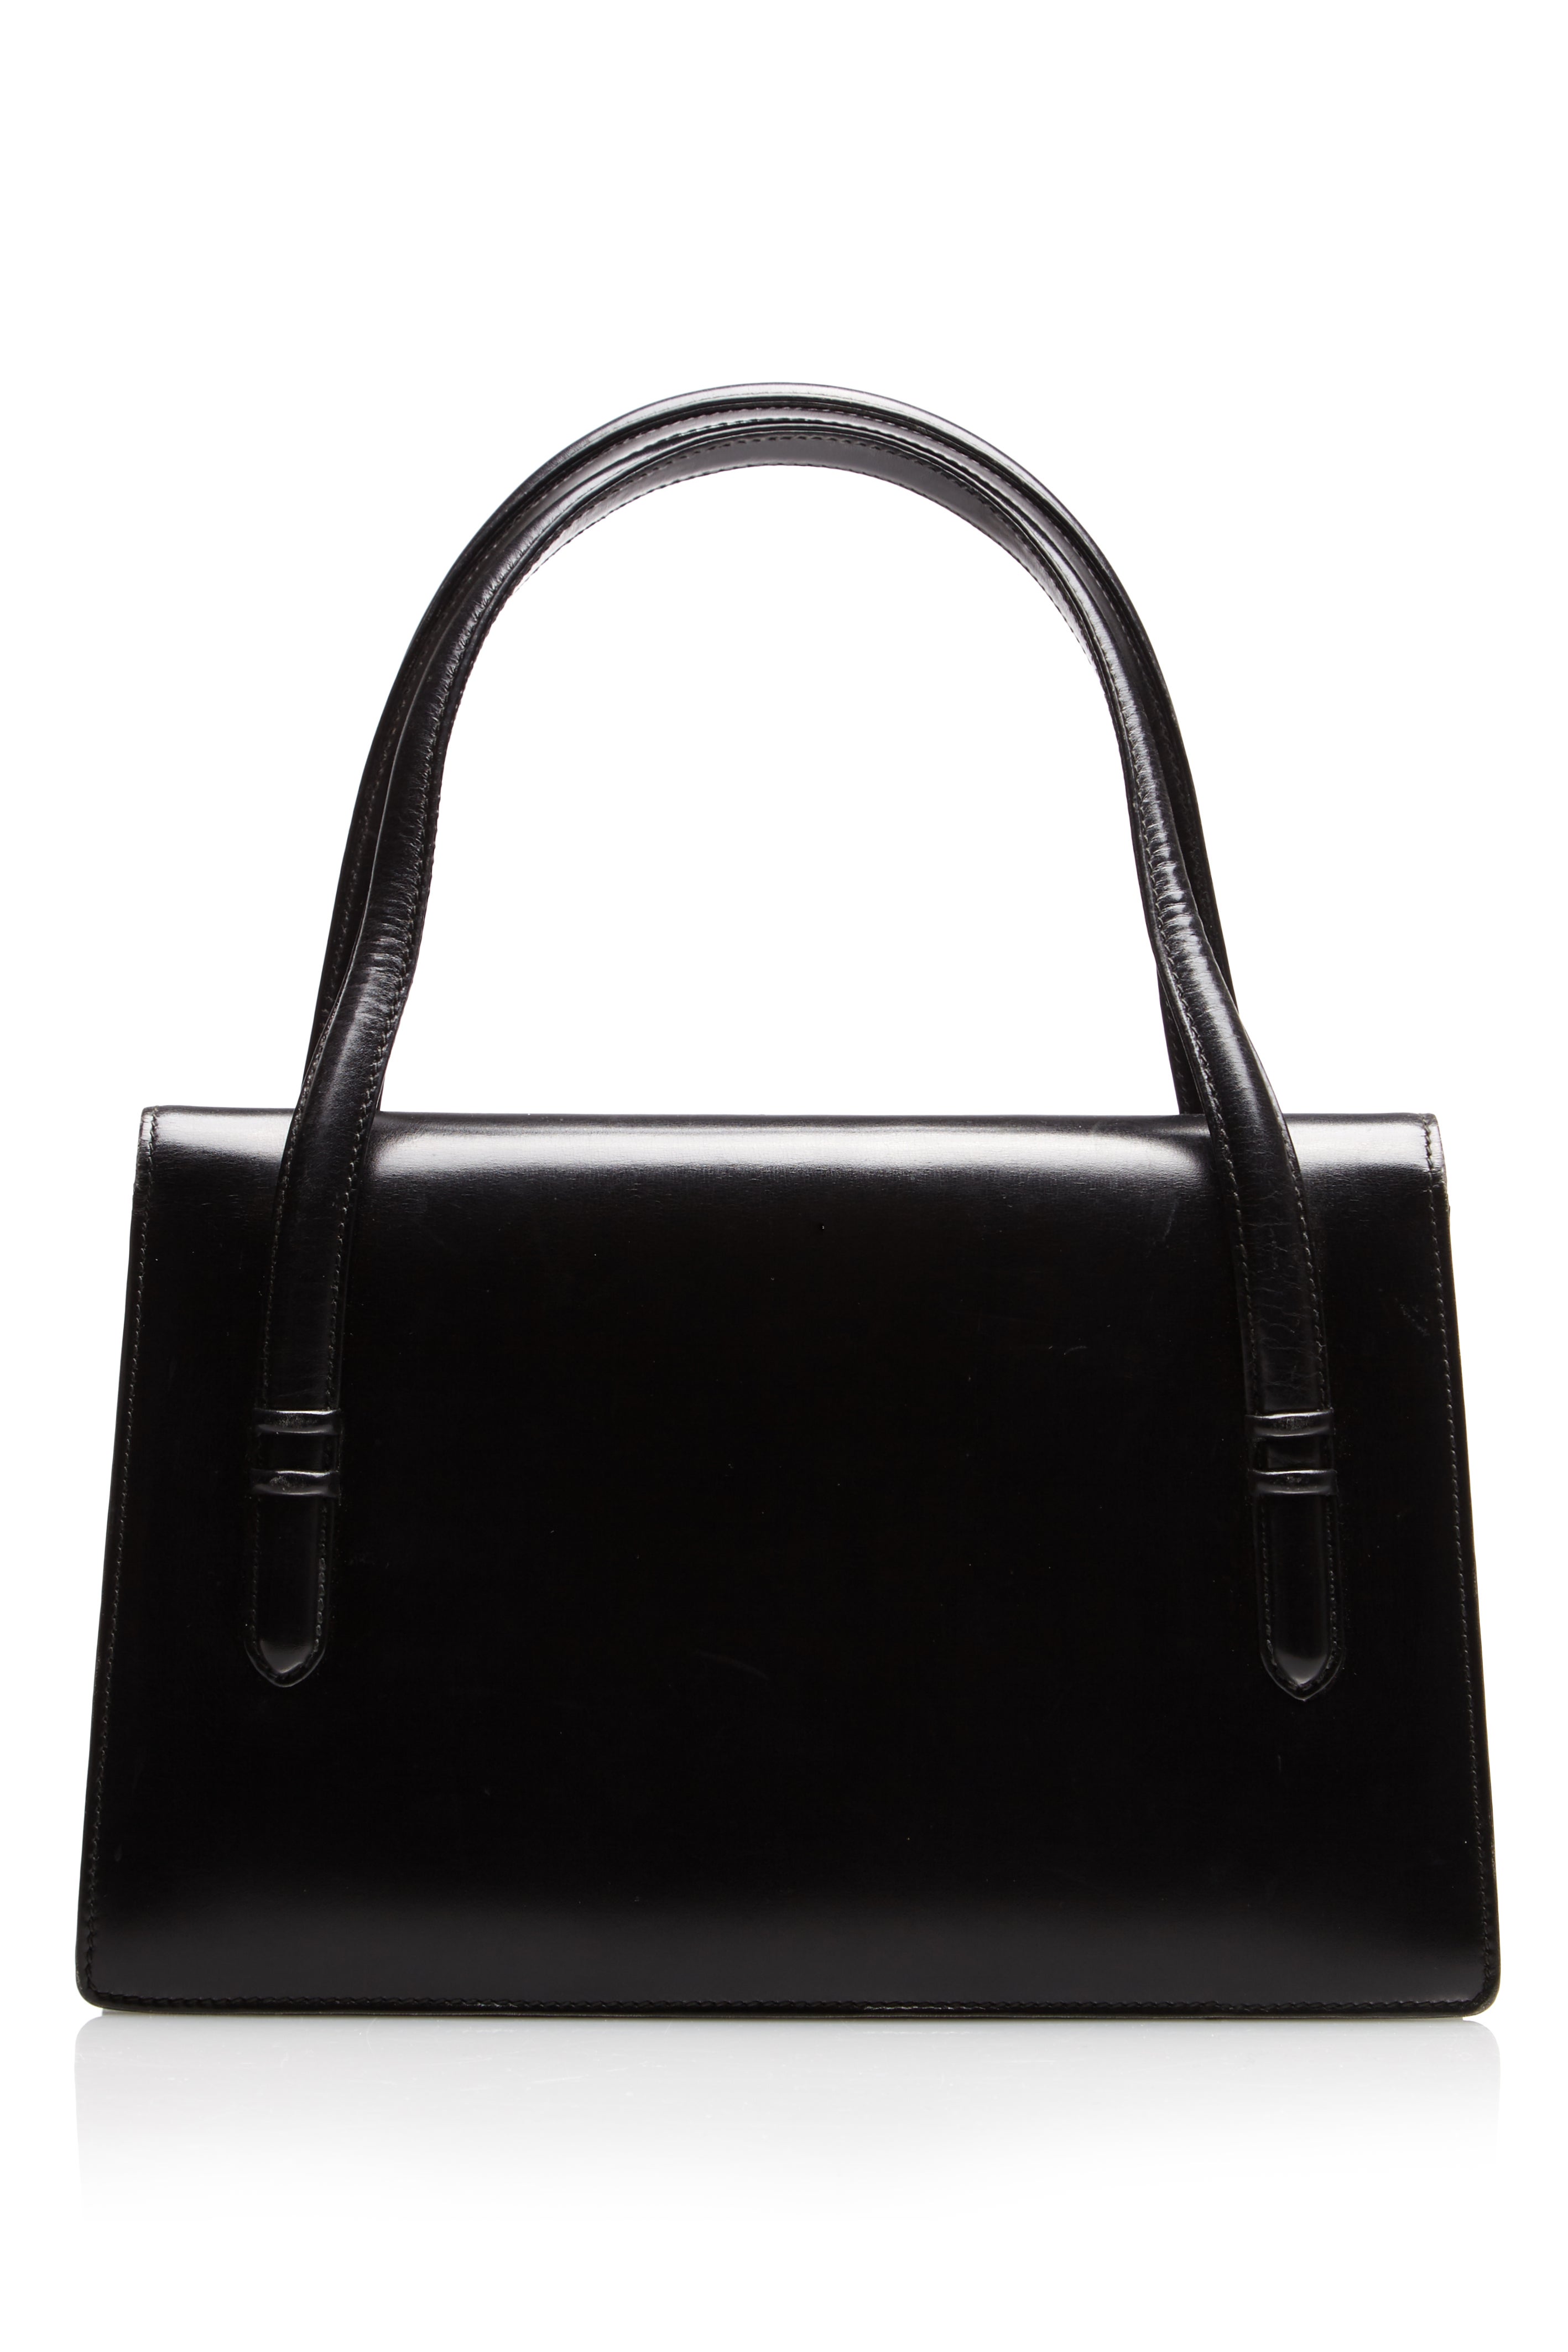 vintage gucci black purse